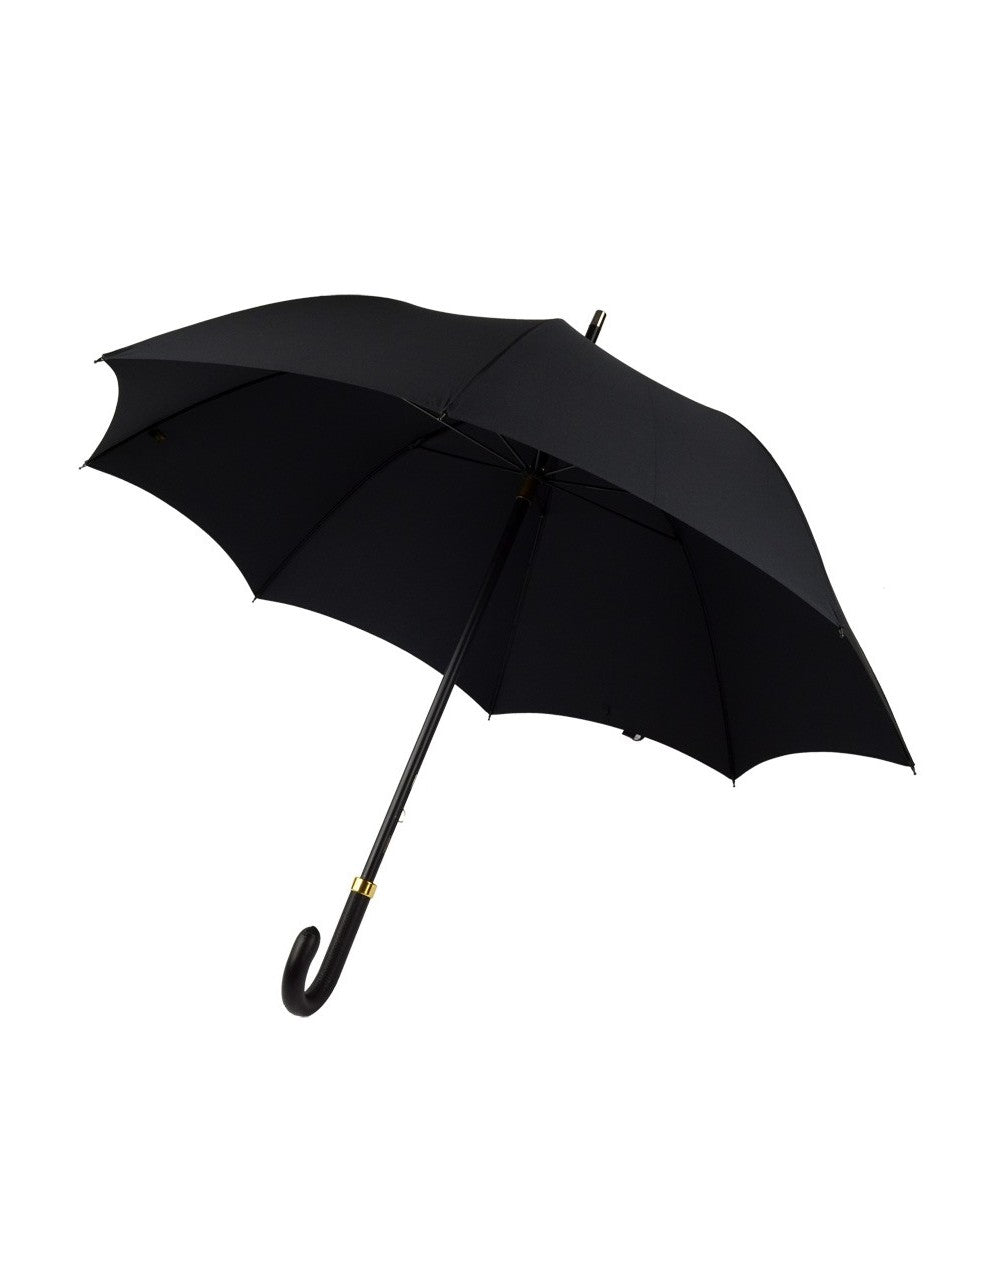 Fox Bespoke British Umbrellas | Leather Handle Gent's Umbrella | Slender Metal Shaft | Cambridge Umbrella | Hand-Stitched Leather | Enjoy the Rain!